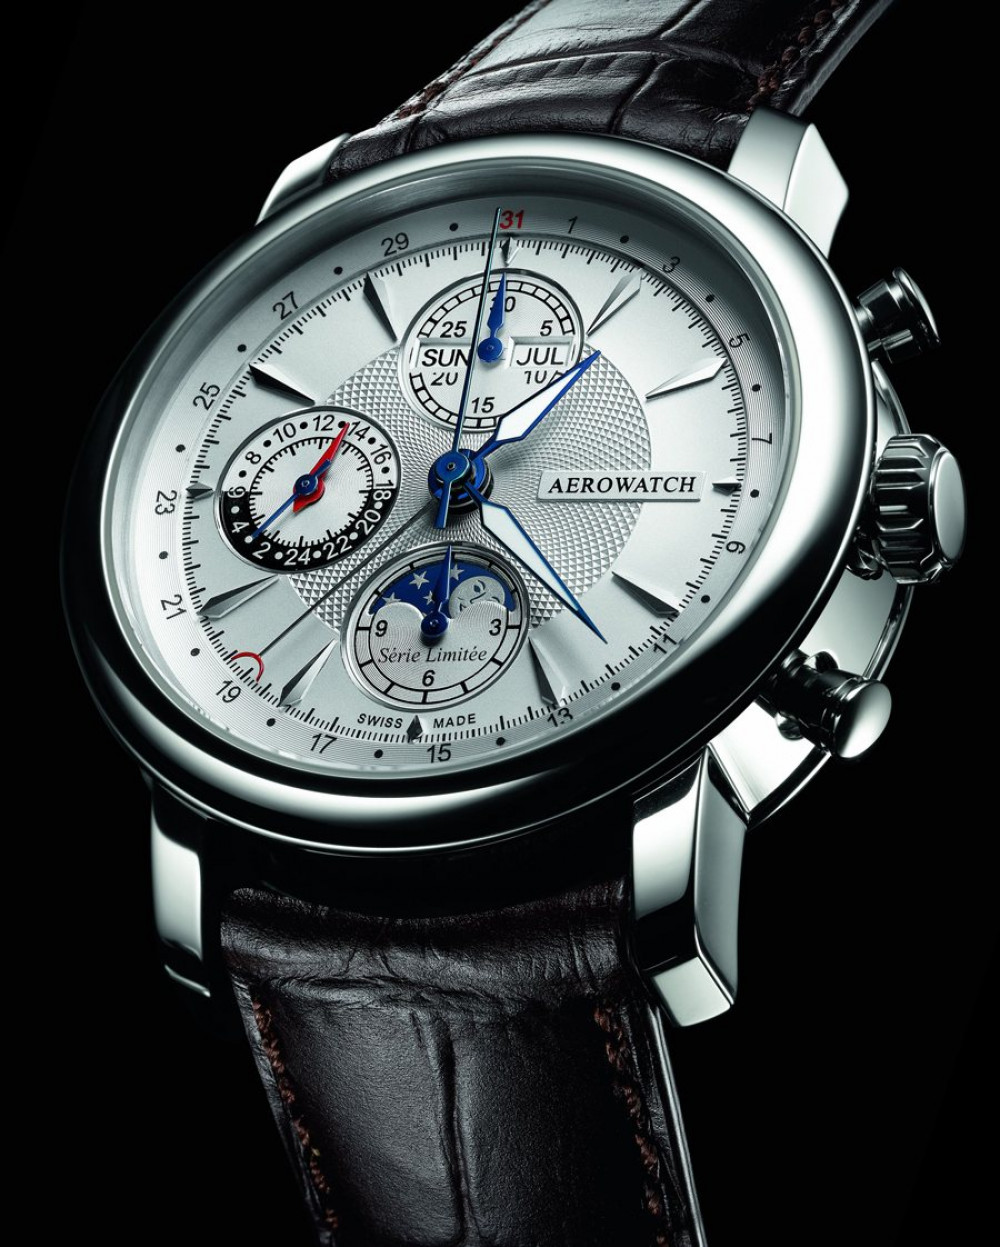 Zegarek firmy Aerowatch, model Chronograph Renaissance